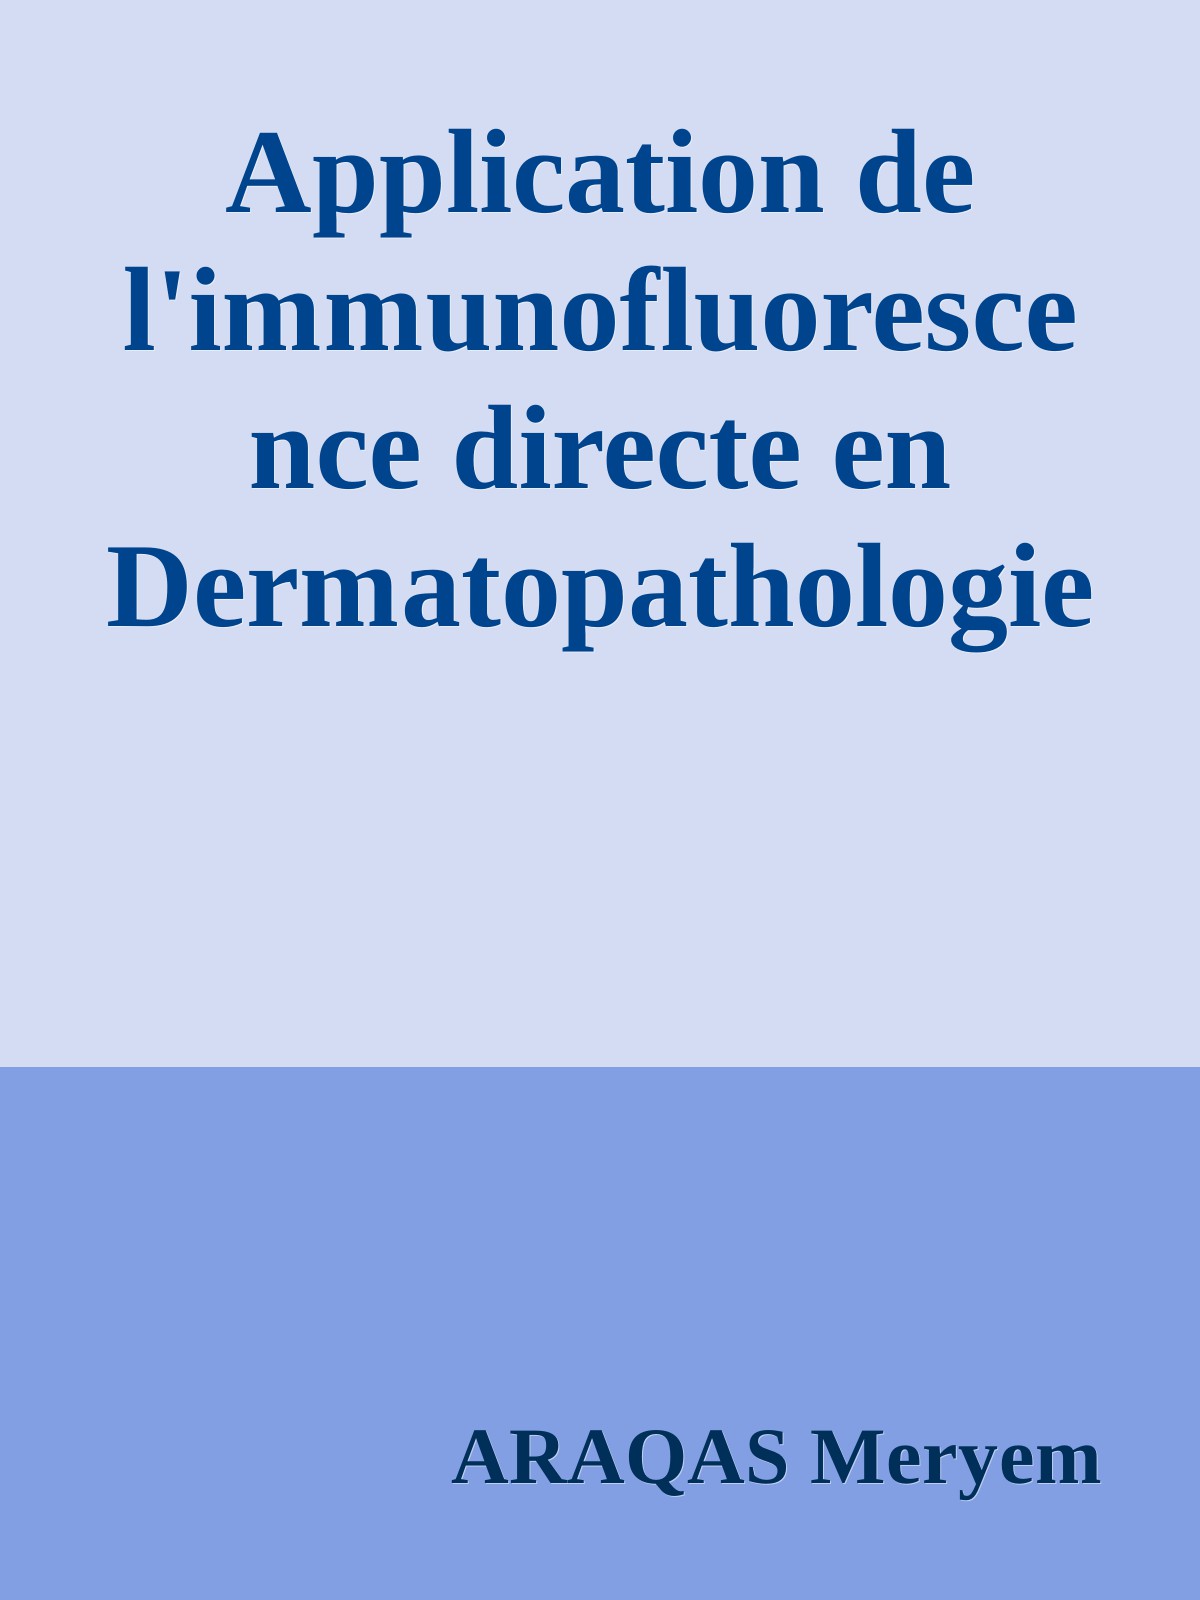 Application de l'immunofluorescence directe en Dermatopathologie